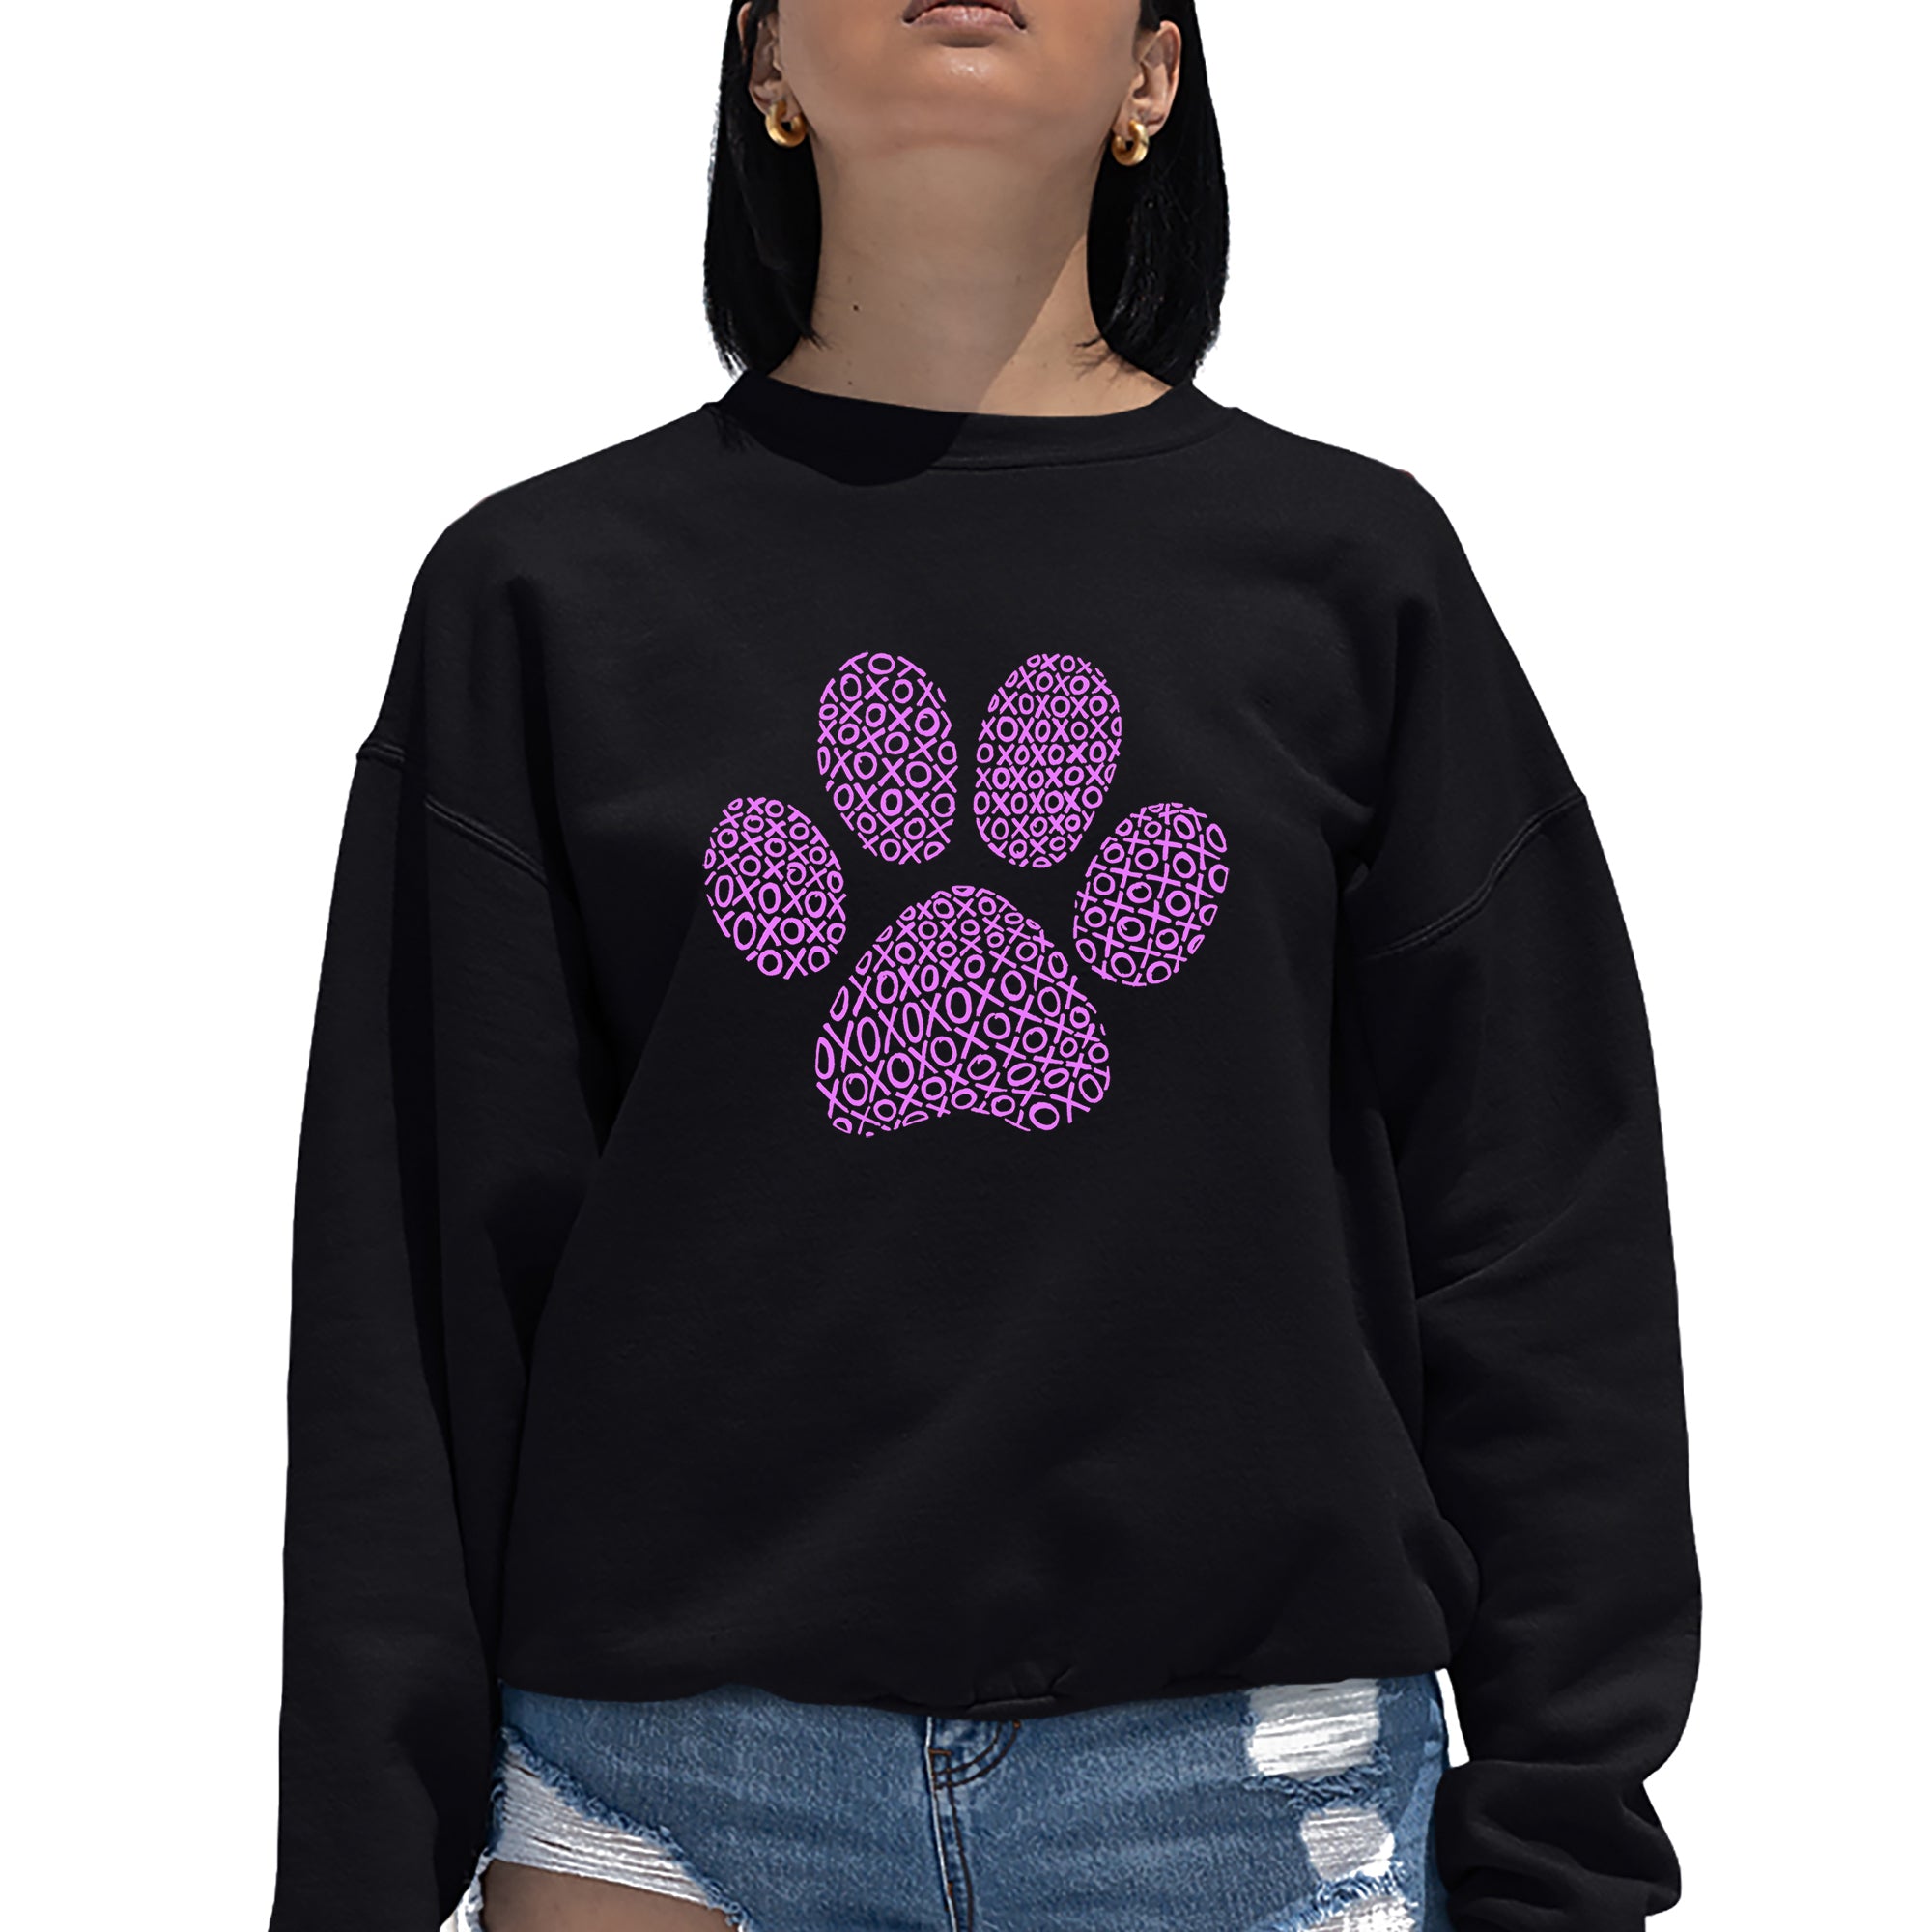 XOXO Dog Paw - Women's Word Art Crewneck Sweatshirt - Purple - XXXX-Large